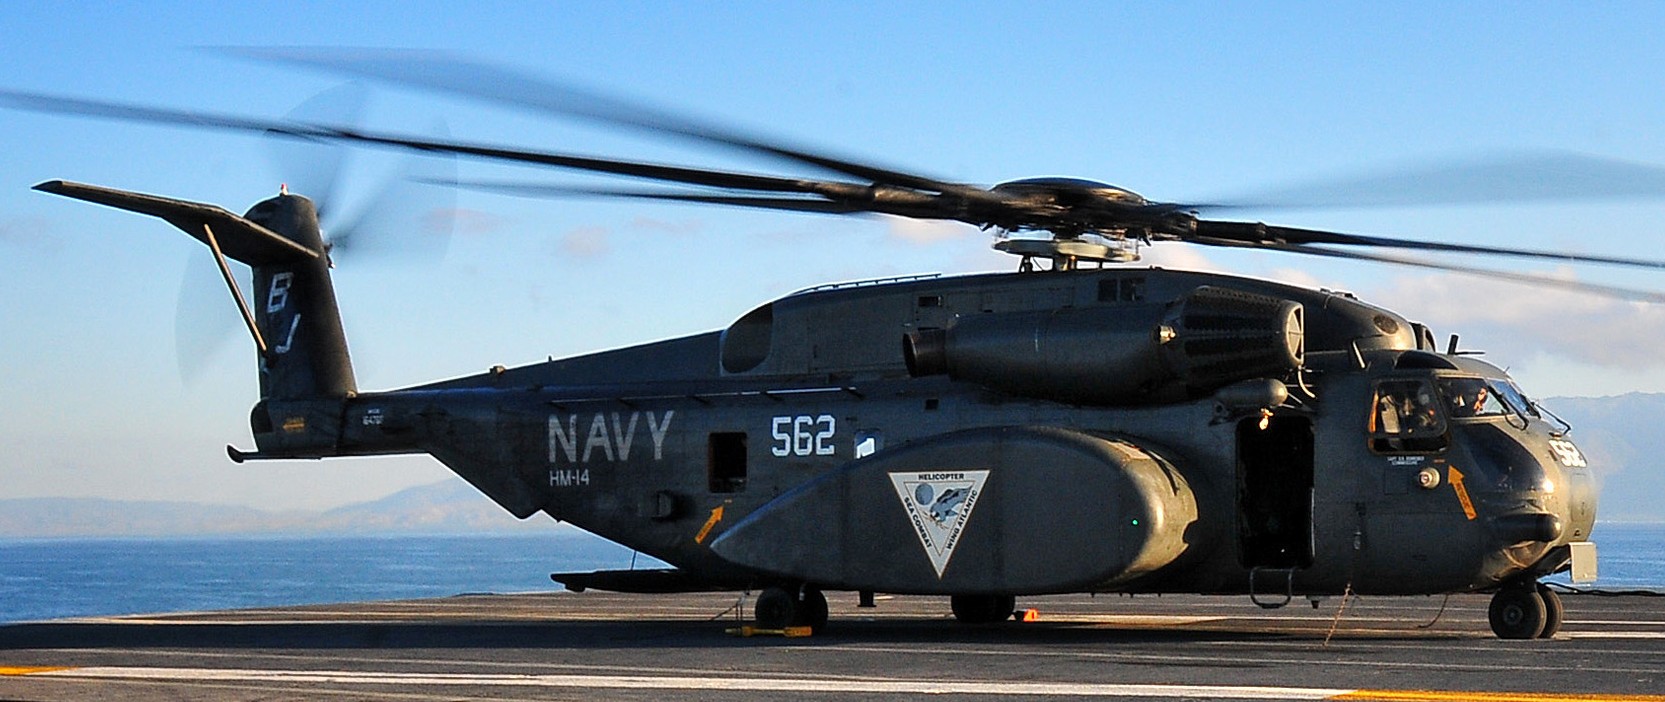 hm-14 vanguard helicopter mine countermeasures squadron navy mh-53e sea dragon 155